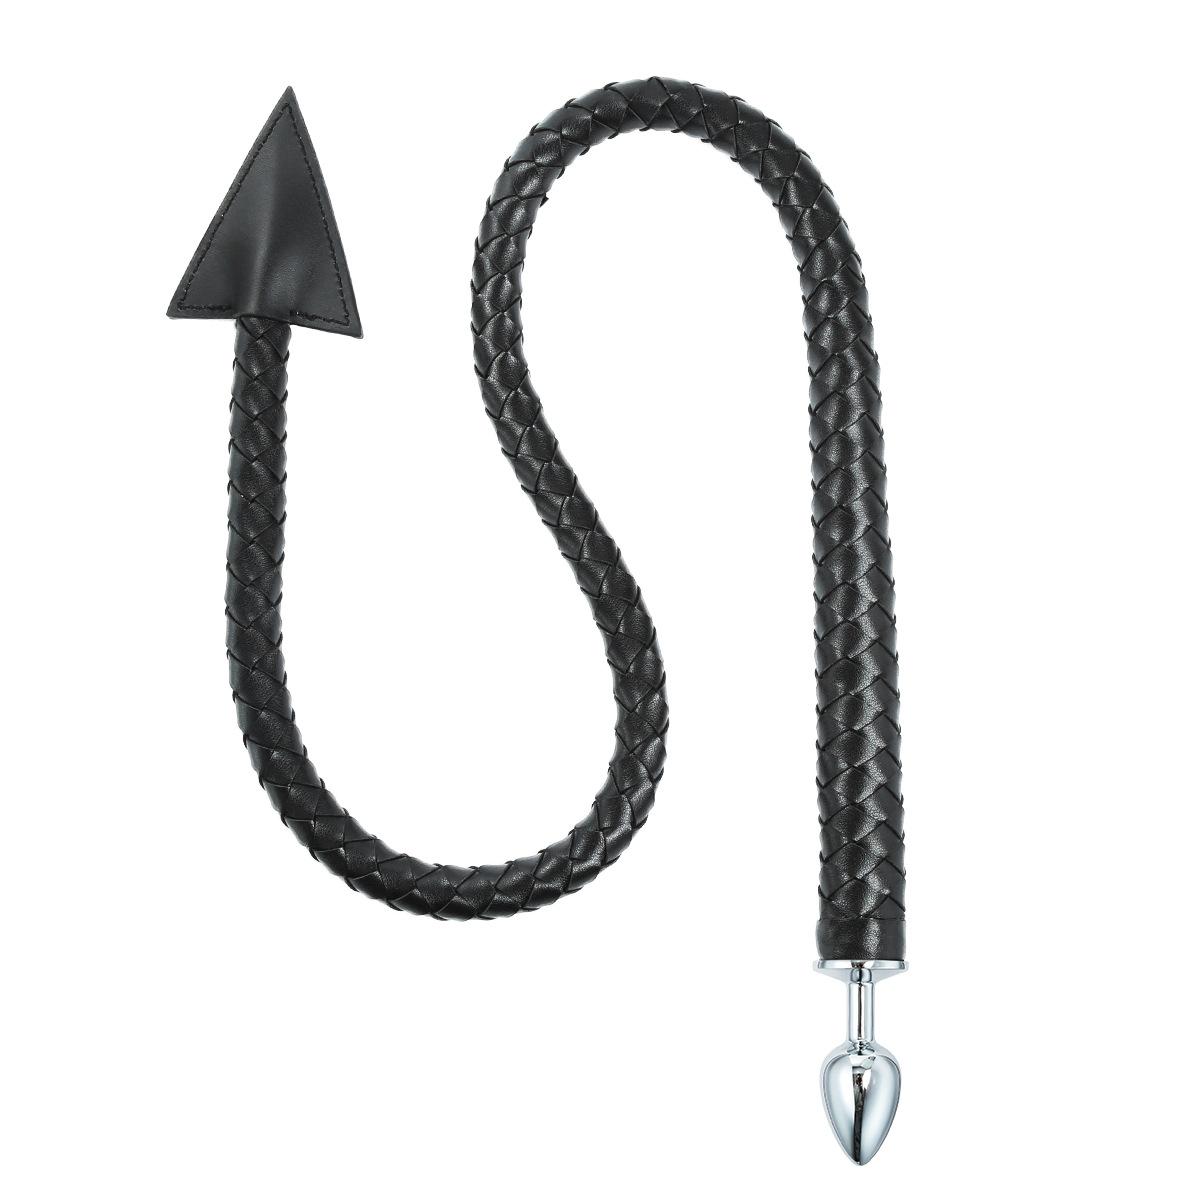 Pu horse whip, triangular leather whip, anal plug toy